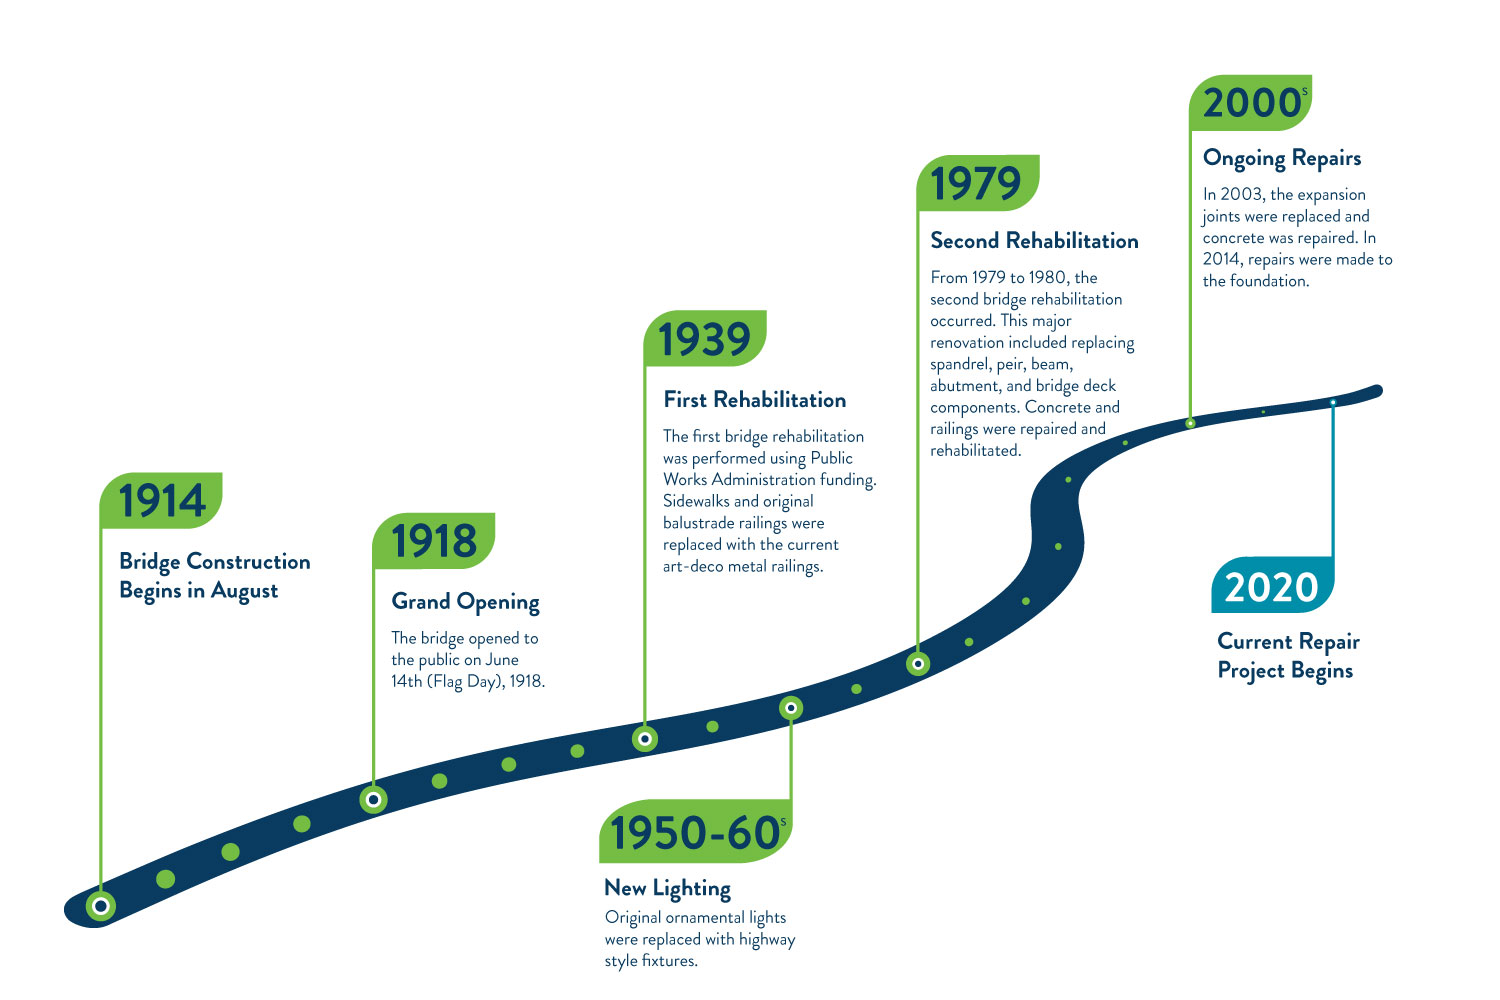 A graphic timeline describing  major bridge events starting in 1914 through 2020